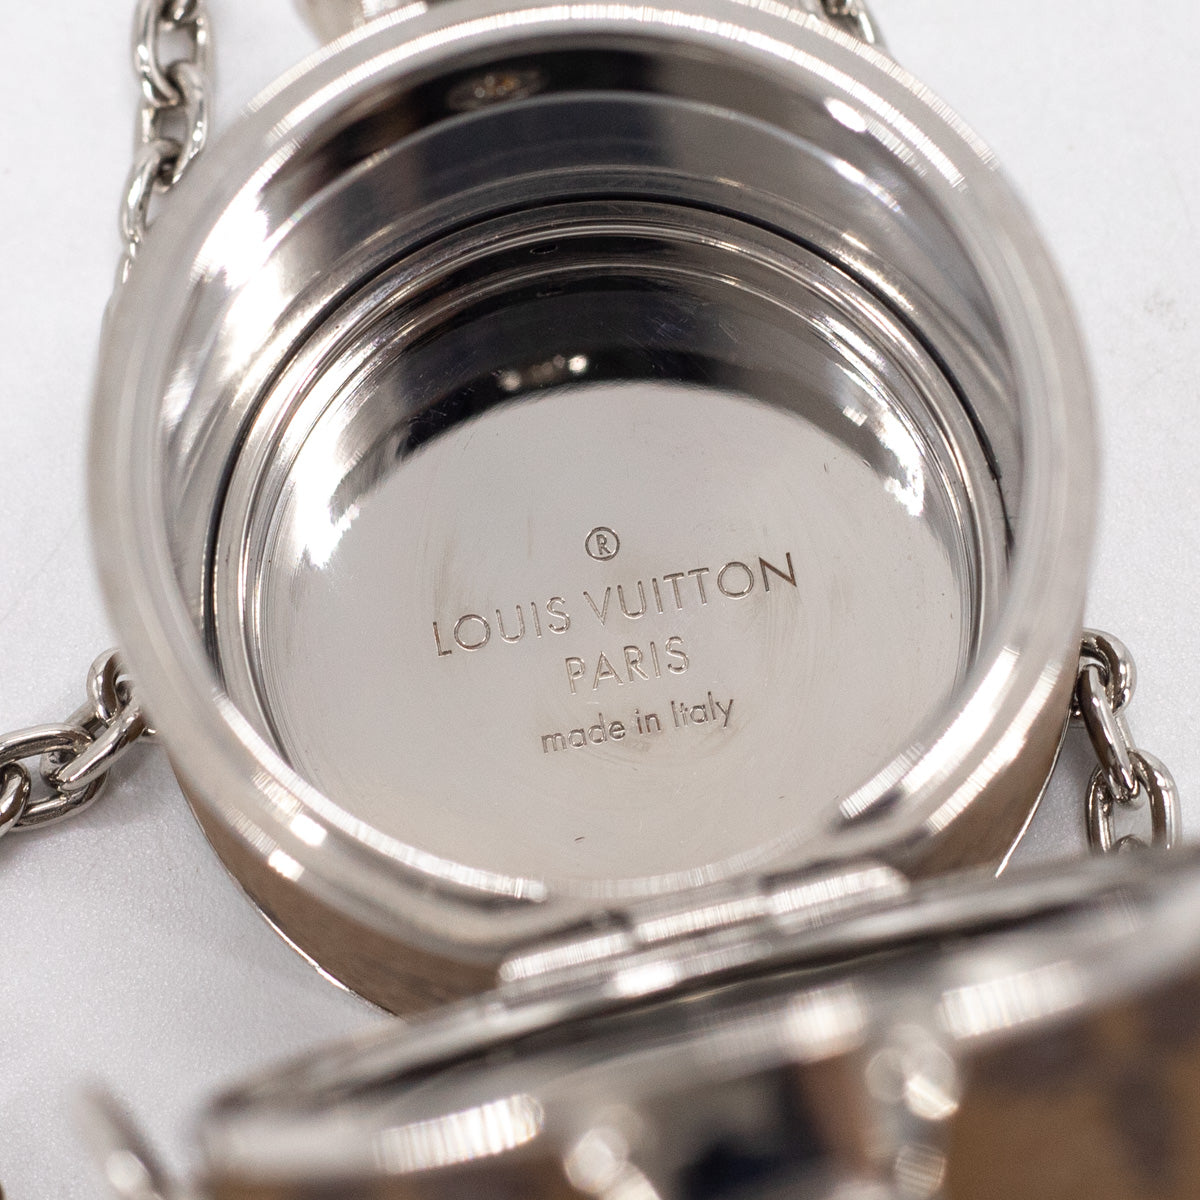 Vintage Louis Vuitton Lipstick Monogram Case 62% off retail